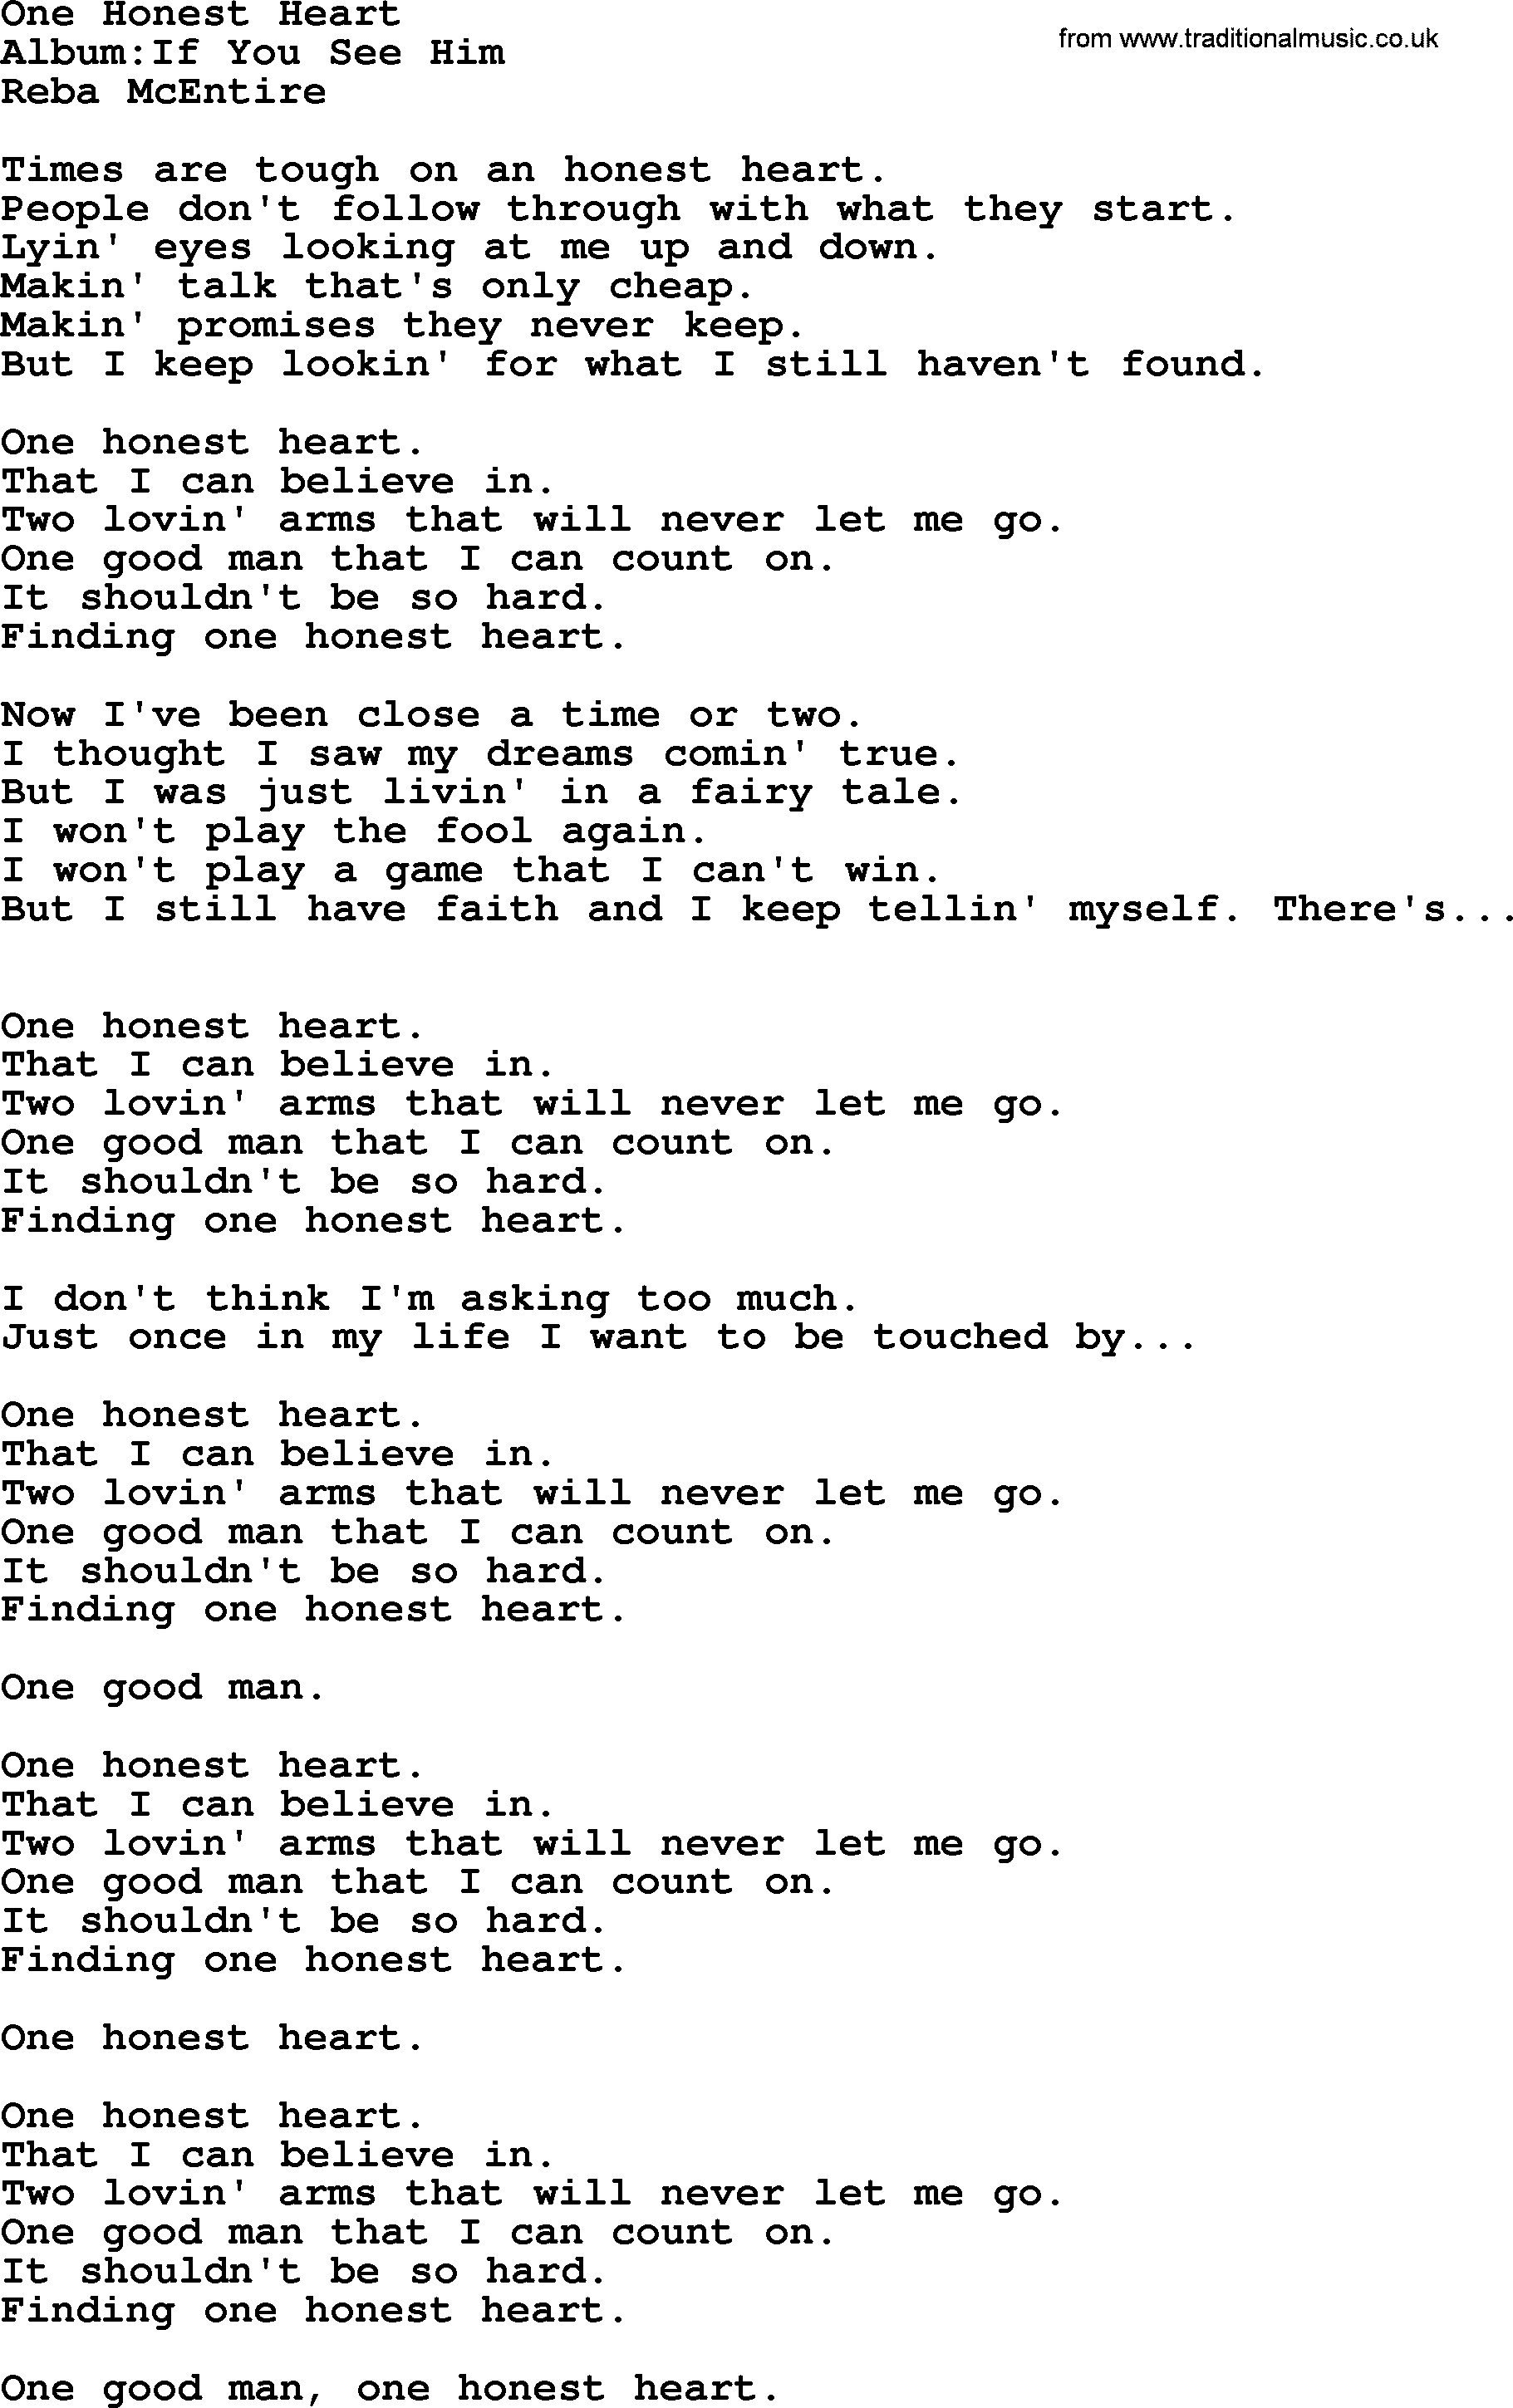 Reba McEntire song: One Honest Heart lyrics